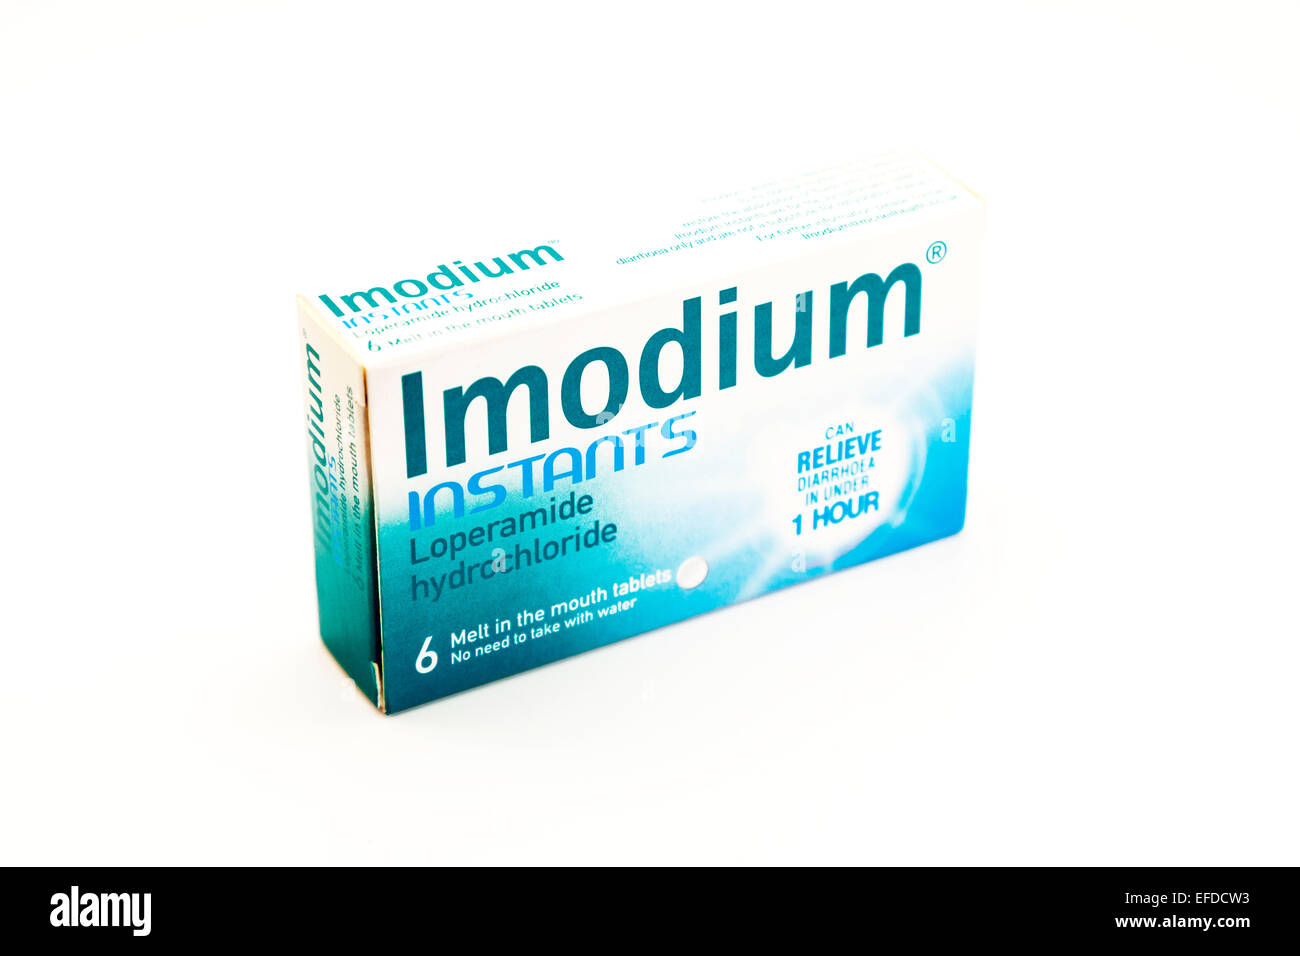 Imodium instants tablets diarrhoea diarrhea remedy cure relief relieve help  runs medicine cut out copy space antidiarrheal drug Stock Photo - Alamy